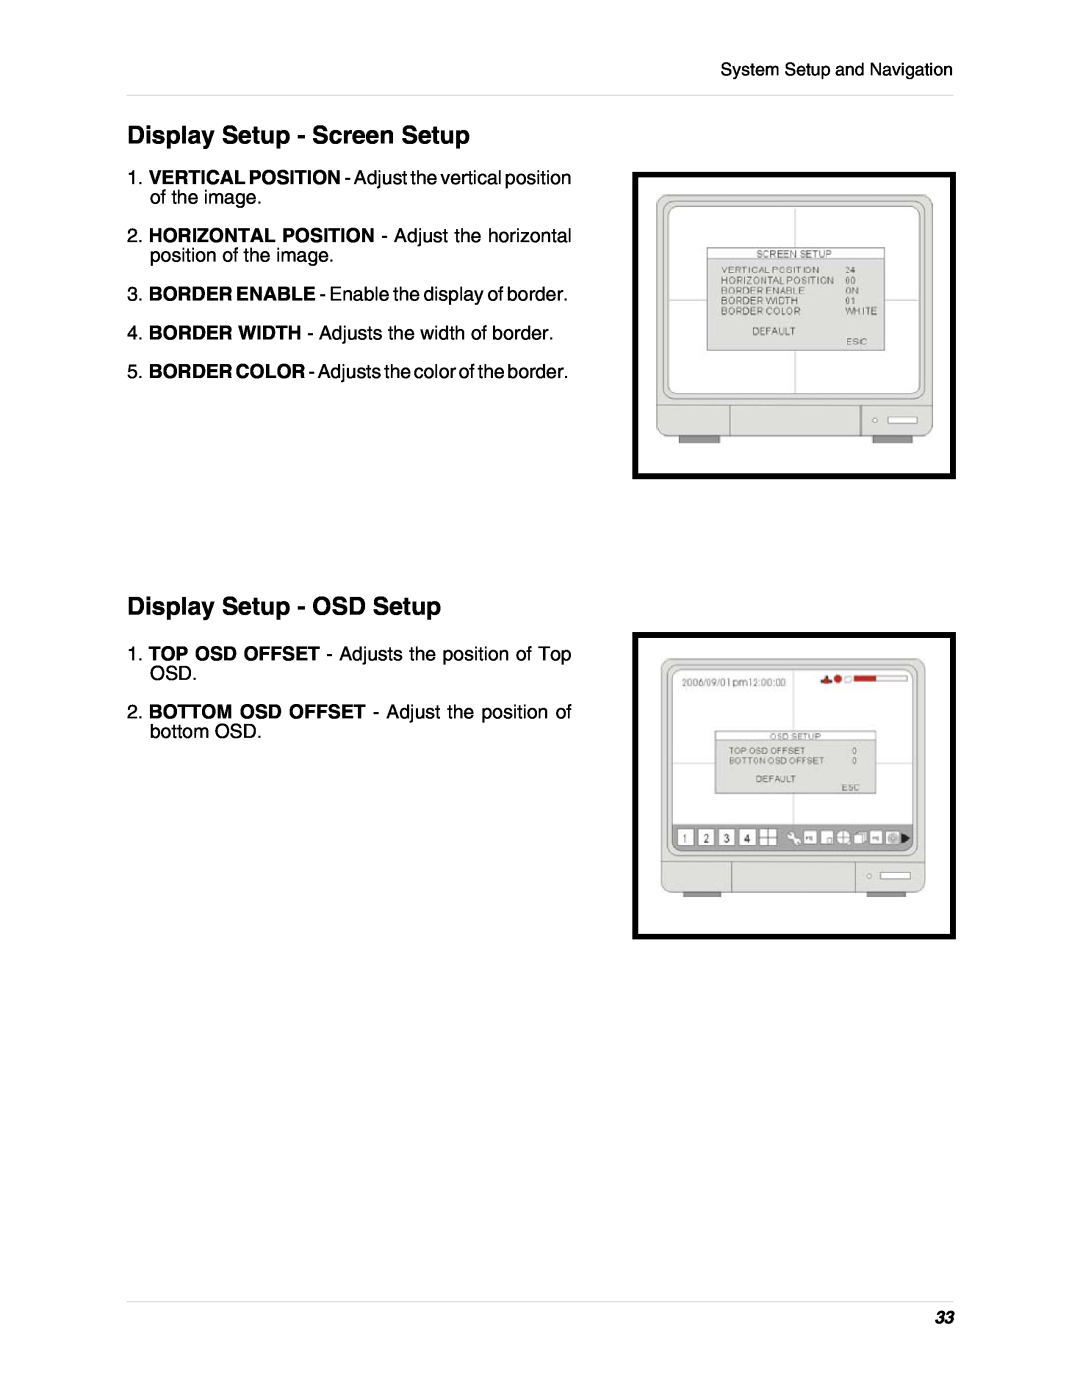 LOREX Technology L15D400 instruction manual Display Setup - Screen Setup, Display Setup - OSD Setup 